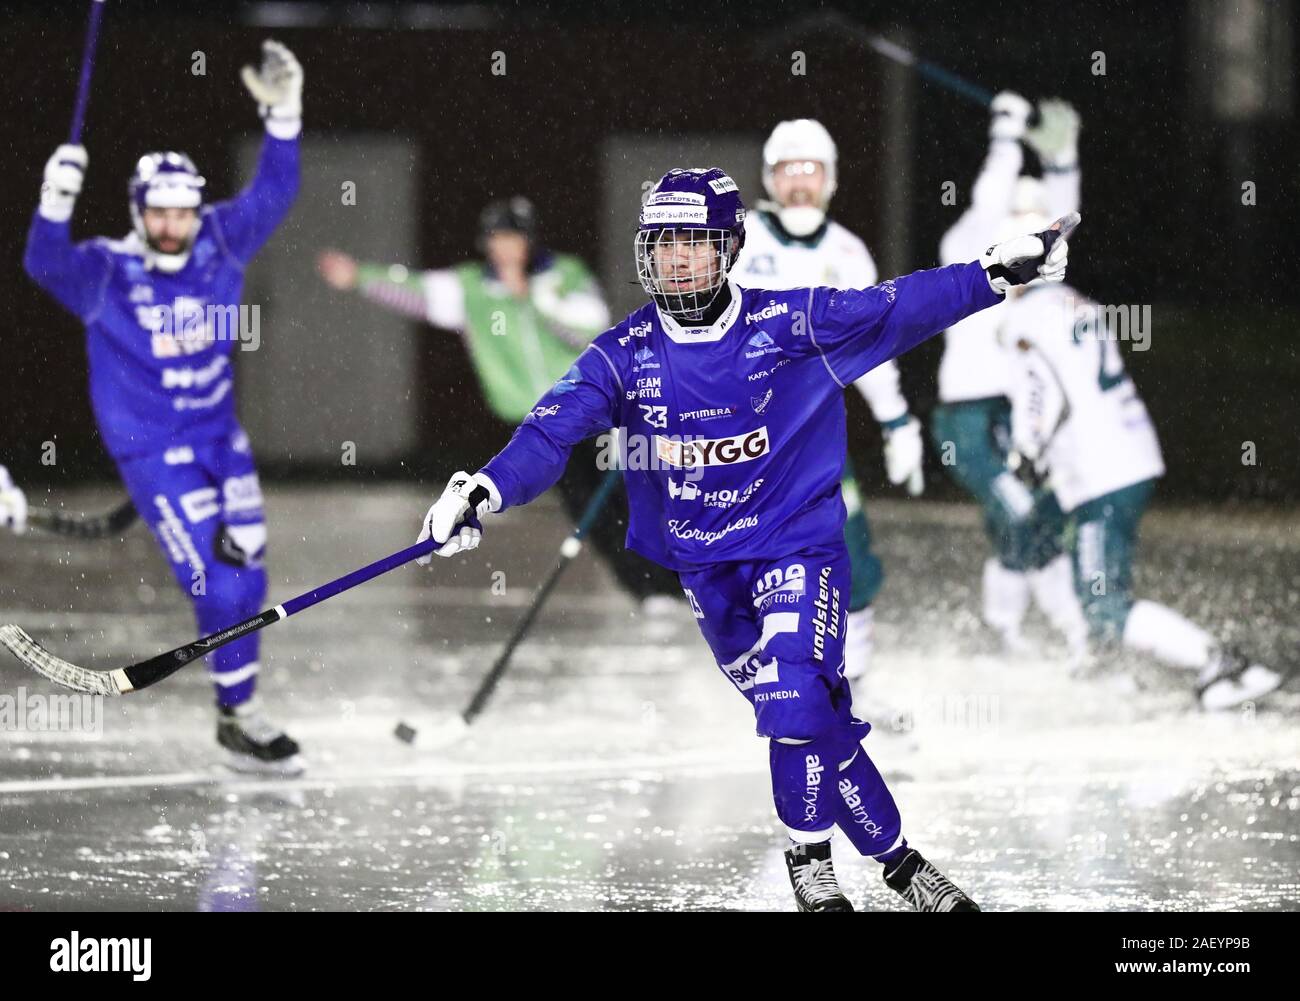 MOTALA 20191122Bandy i Elitserien mellan IFK Motala-Hammarby på K Bygg  arena (isstadion). Philip Florén jublar efter mål. Foto Jeppe Gustafsson  Stock Photo - Alamy